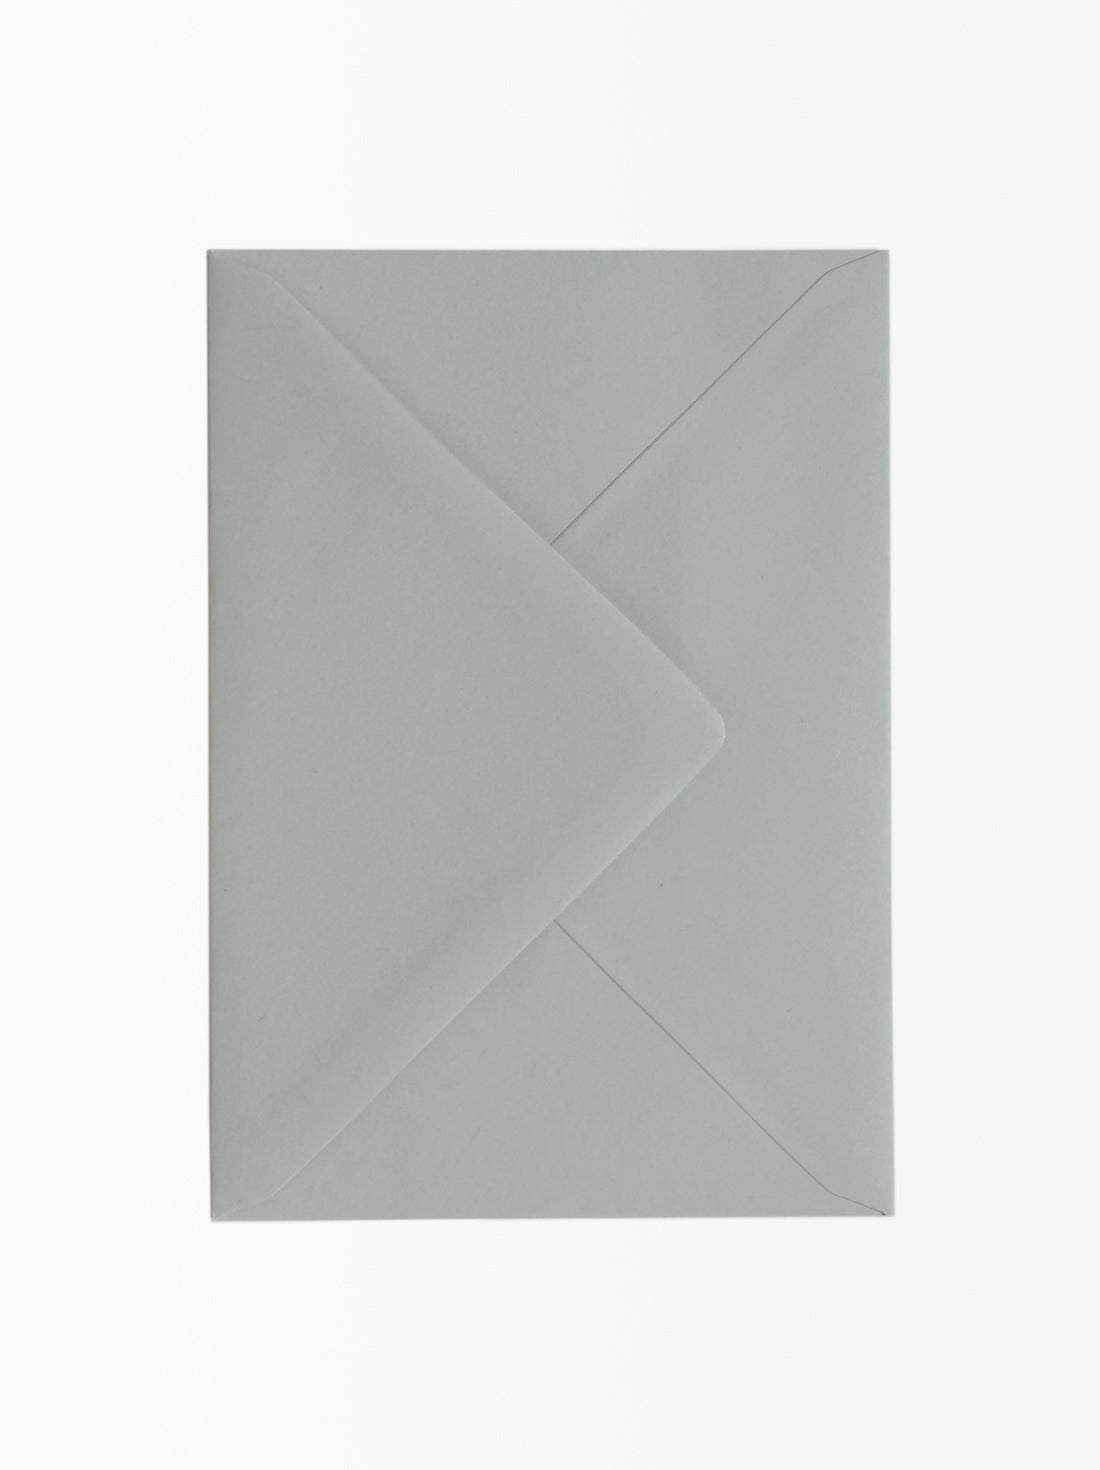 Artcard Envelope